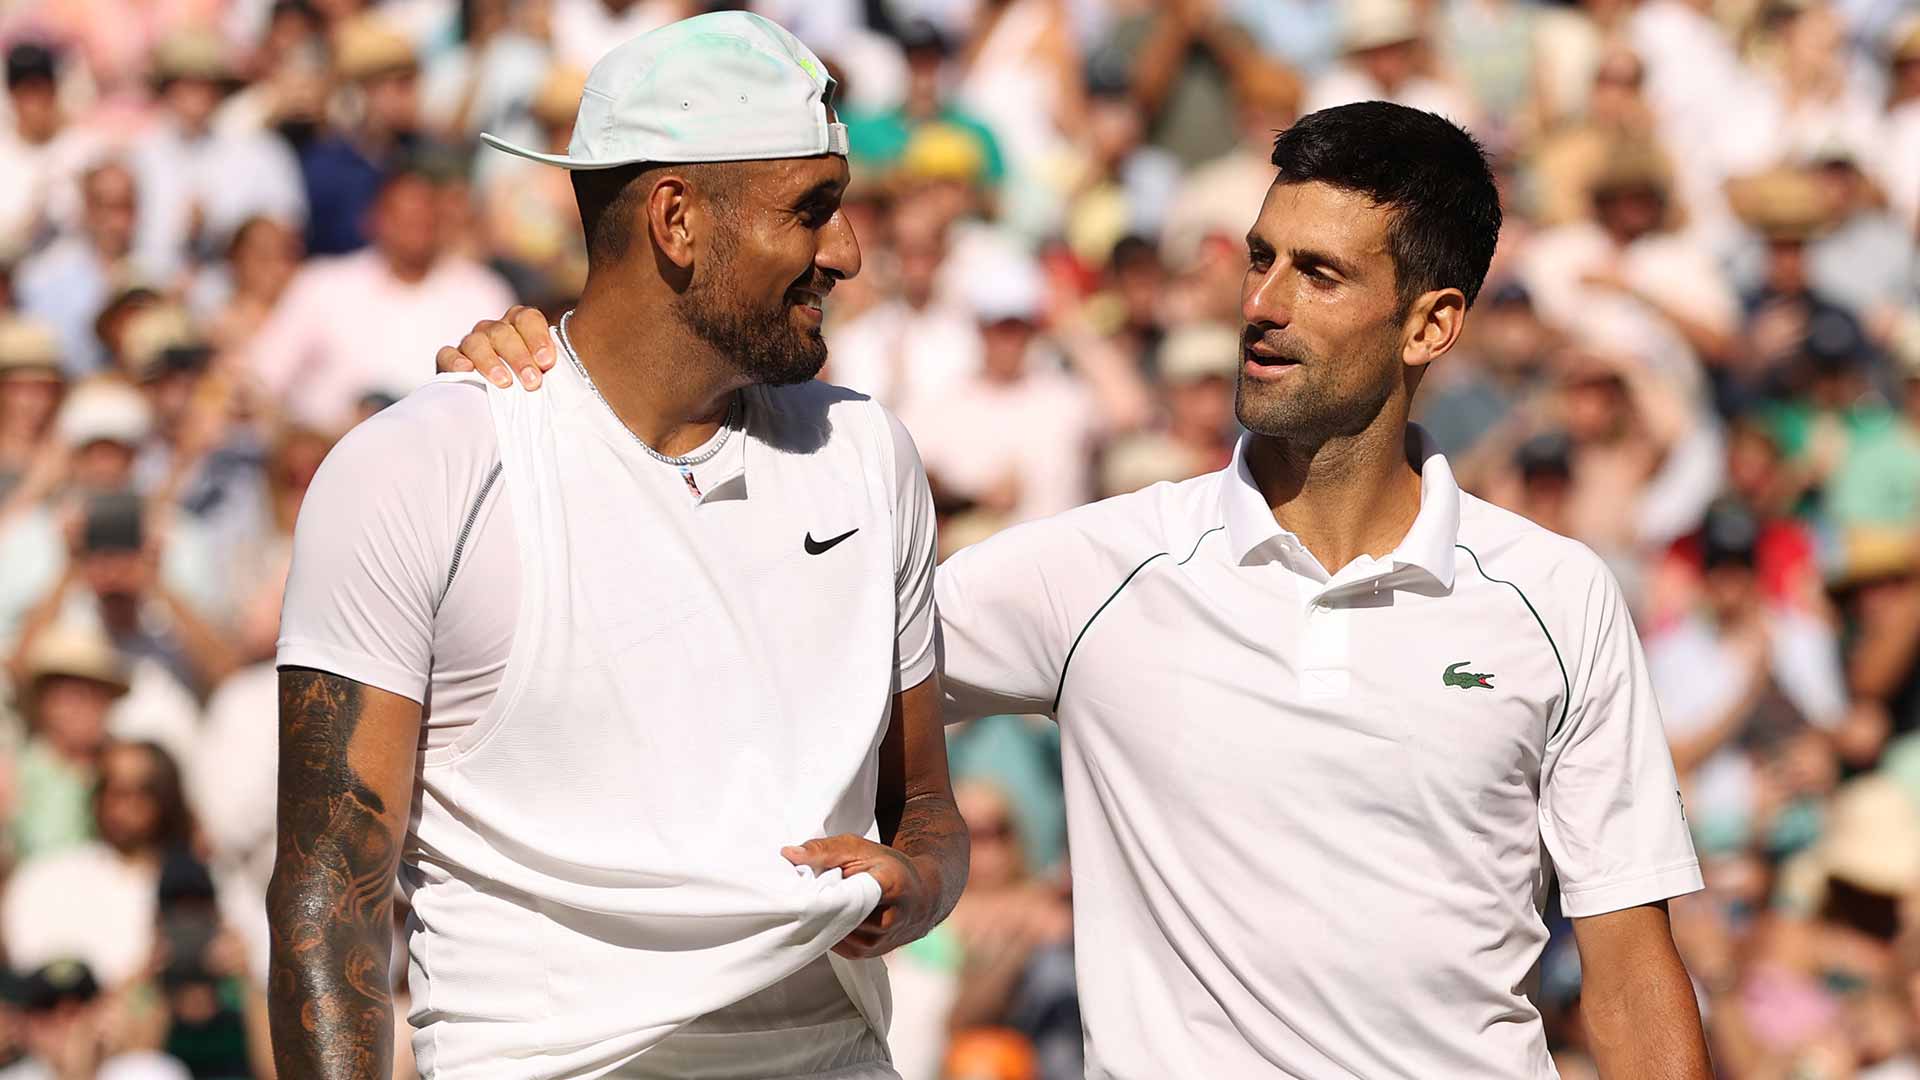 Australian Open 2023: 'Frenemies' Djokovic and Kyrgios to play practice match before Australian Open